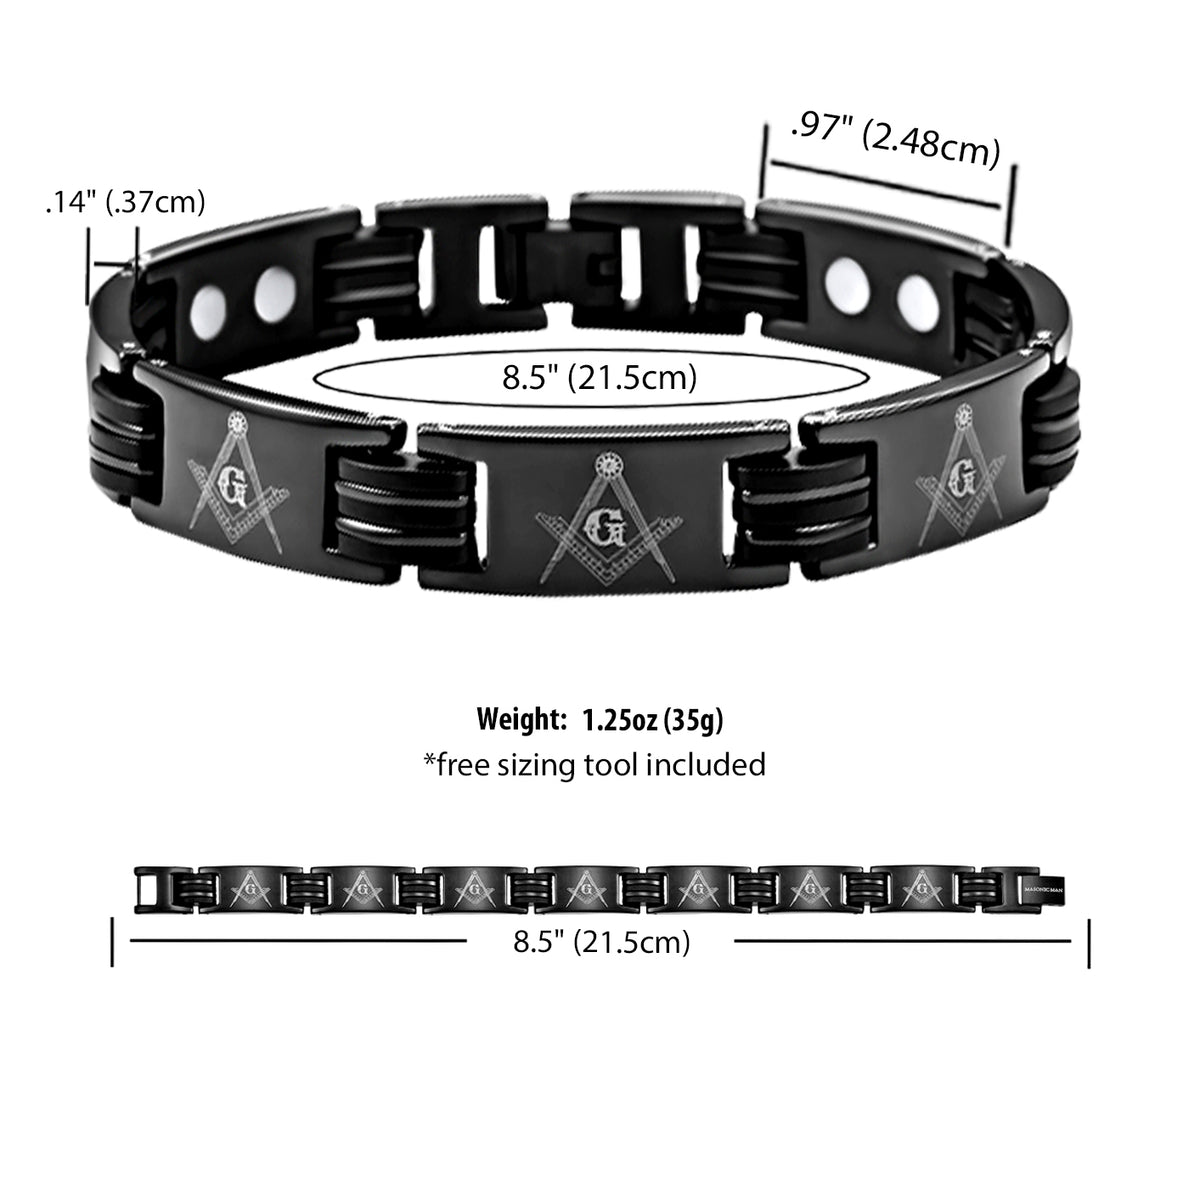 MasonicMan Black Magnetic Titanium Masonic Bracelet